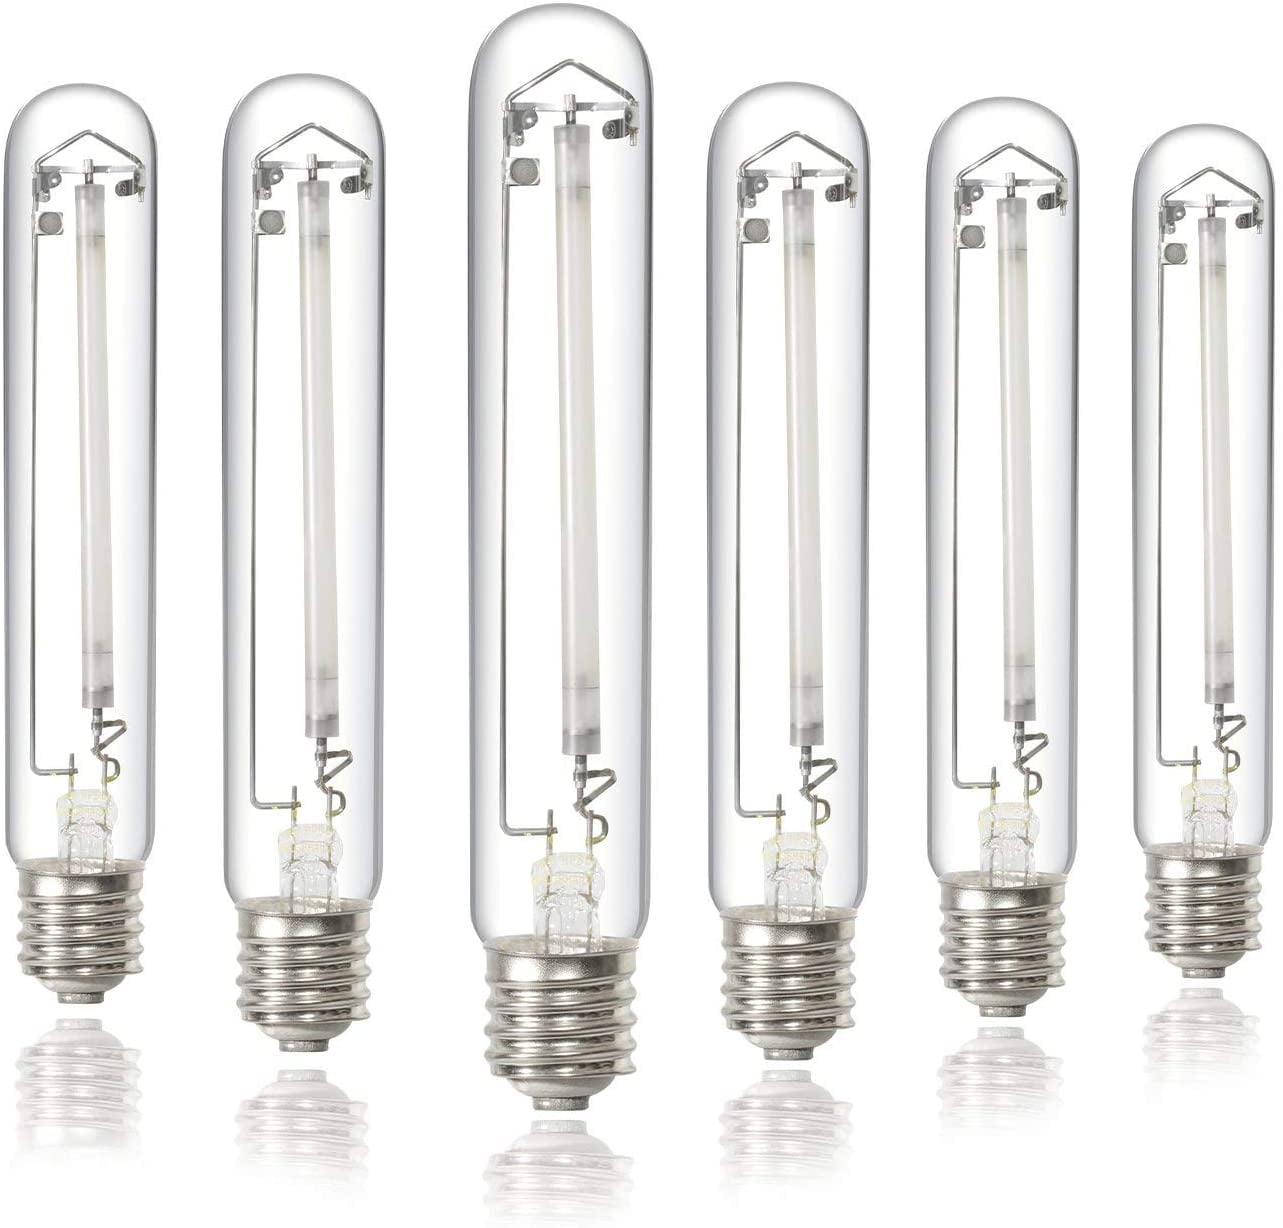 Power Plant Super HPS Professional Indoor Plant Grow Light Bulb/Lamp Hydroponics 